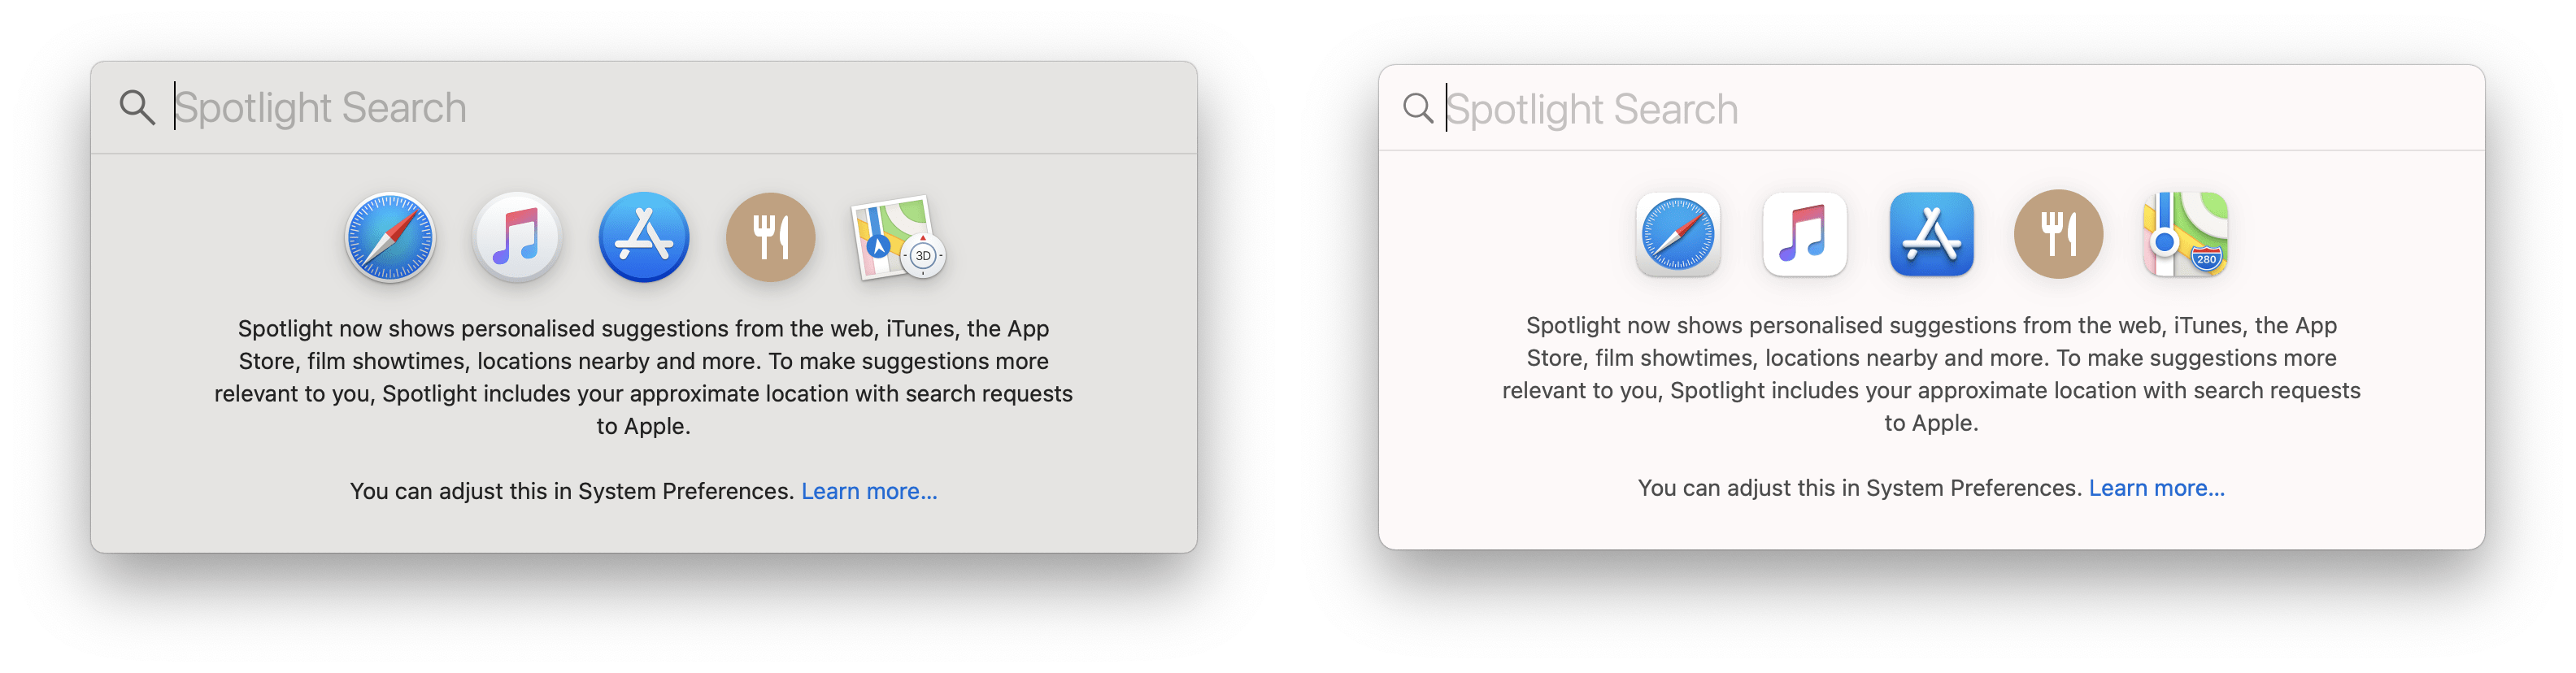 spotlight-macos-catalina-big-sur-comparison